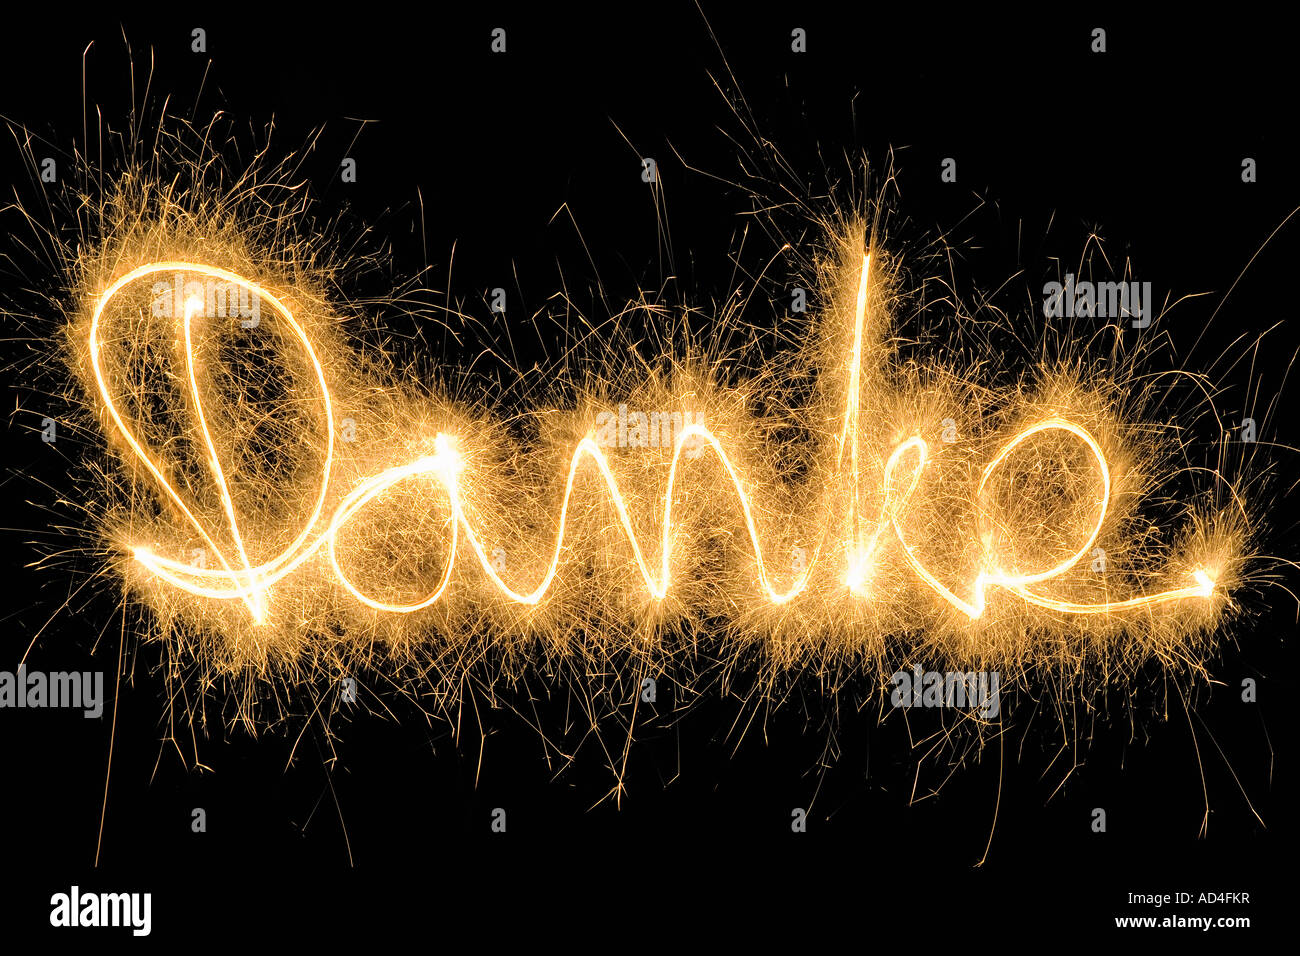 Danke' drawn with a sparkler Stock Photo